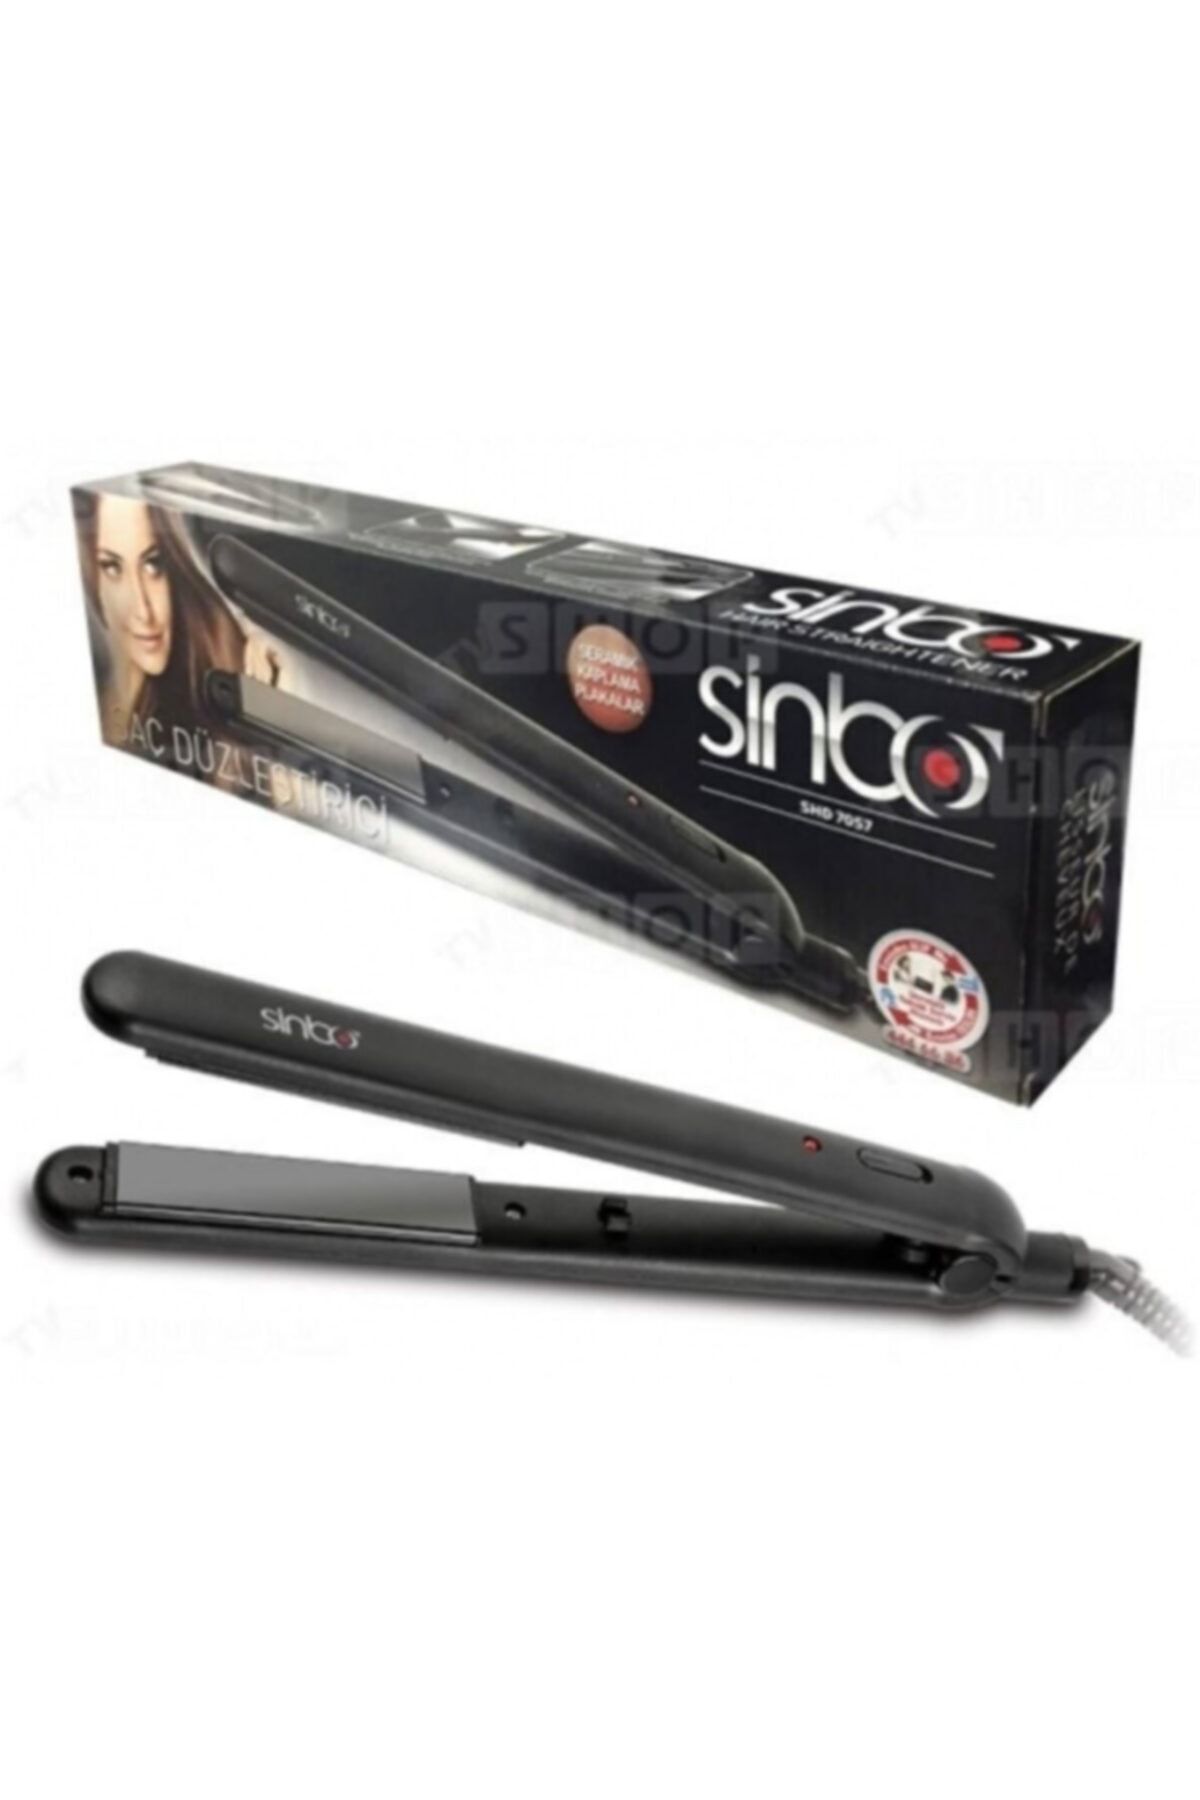 Sinbo Lapush Store Elektrikli Saç Düzleştirici